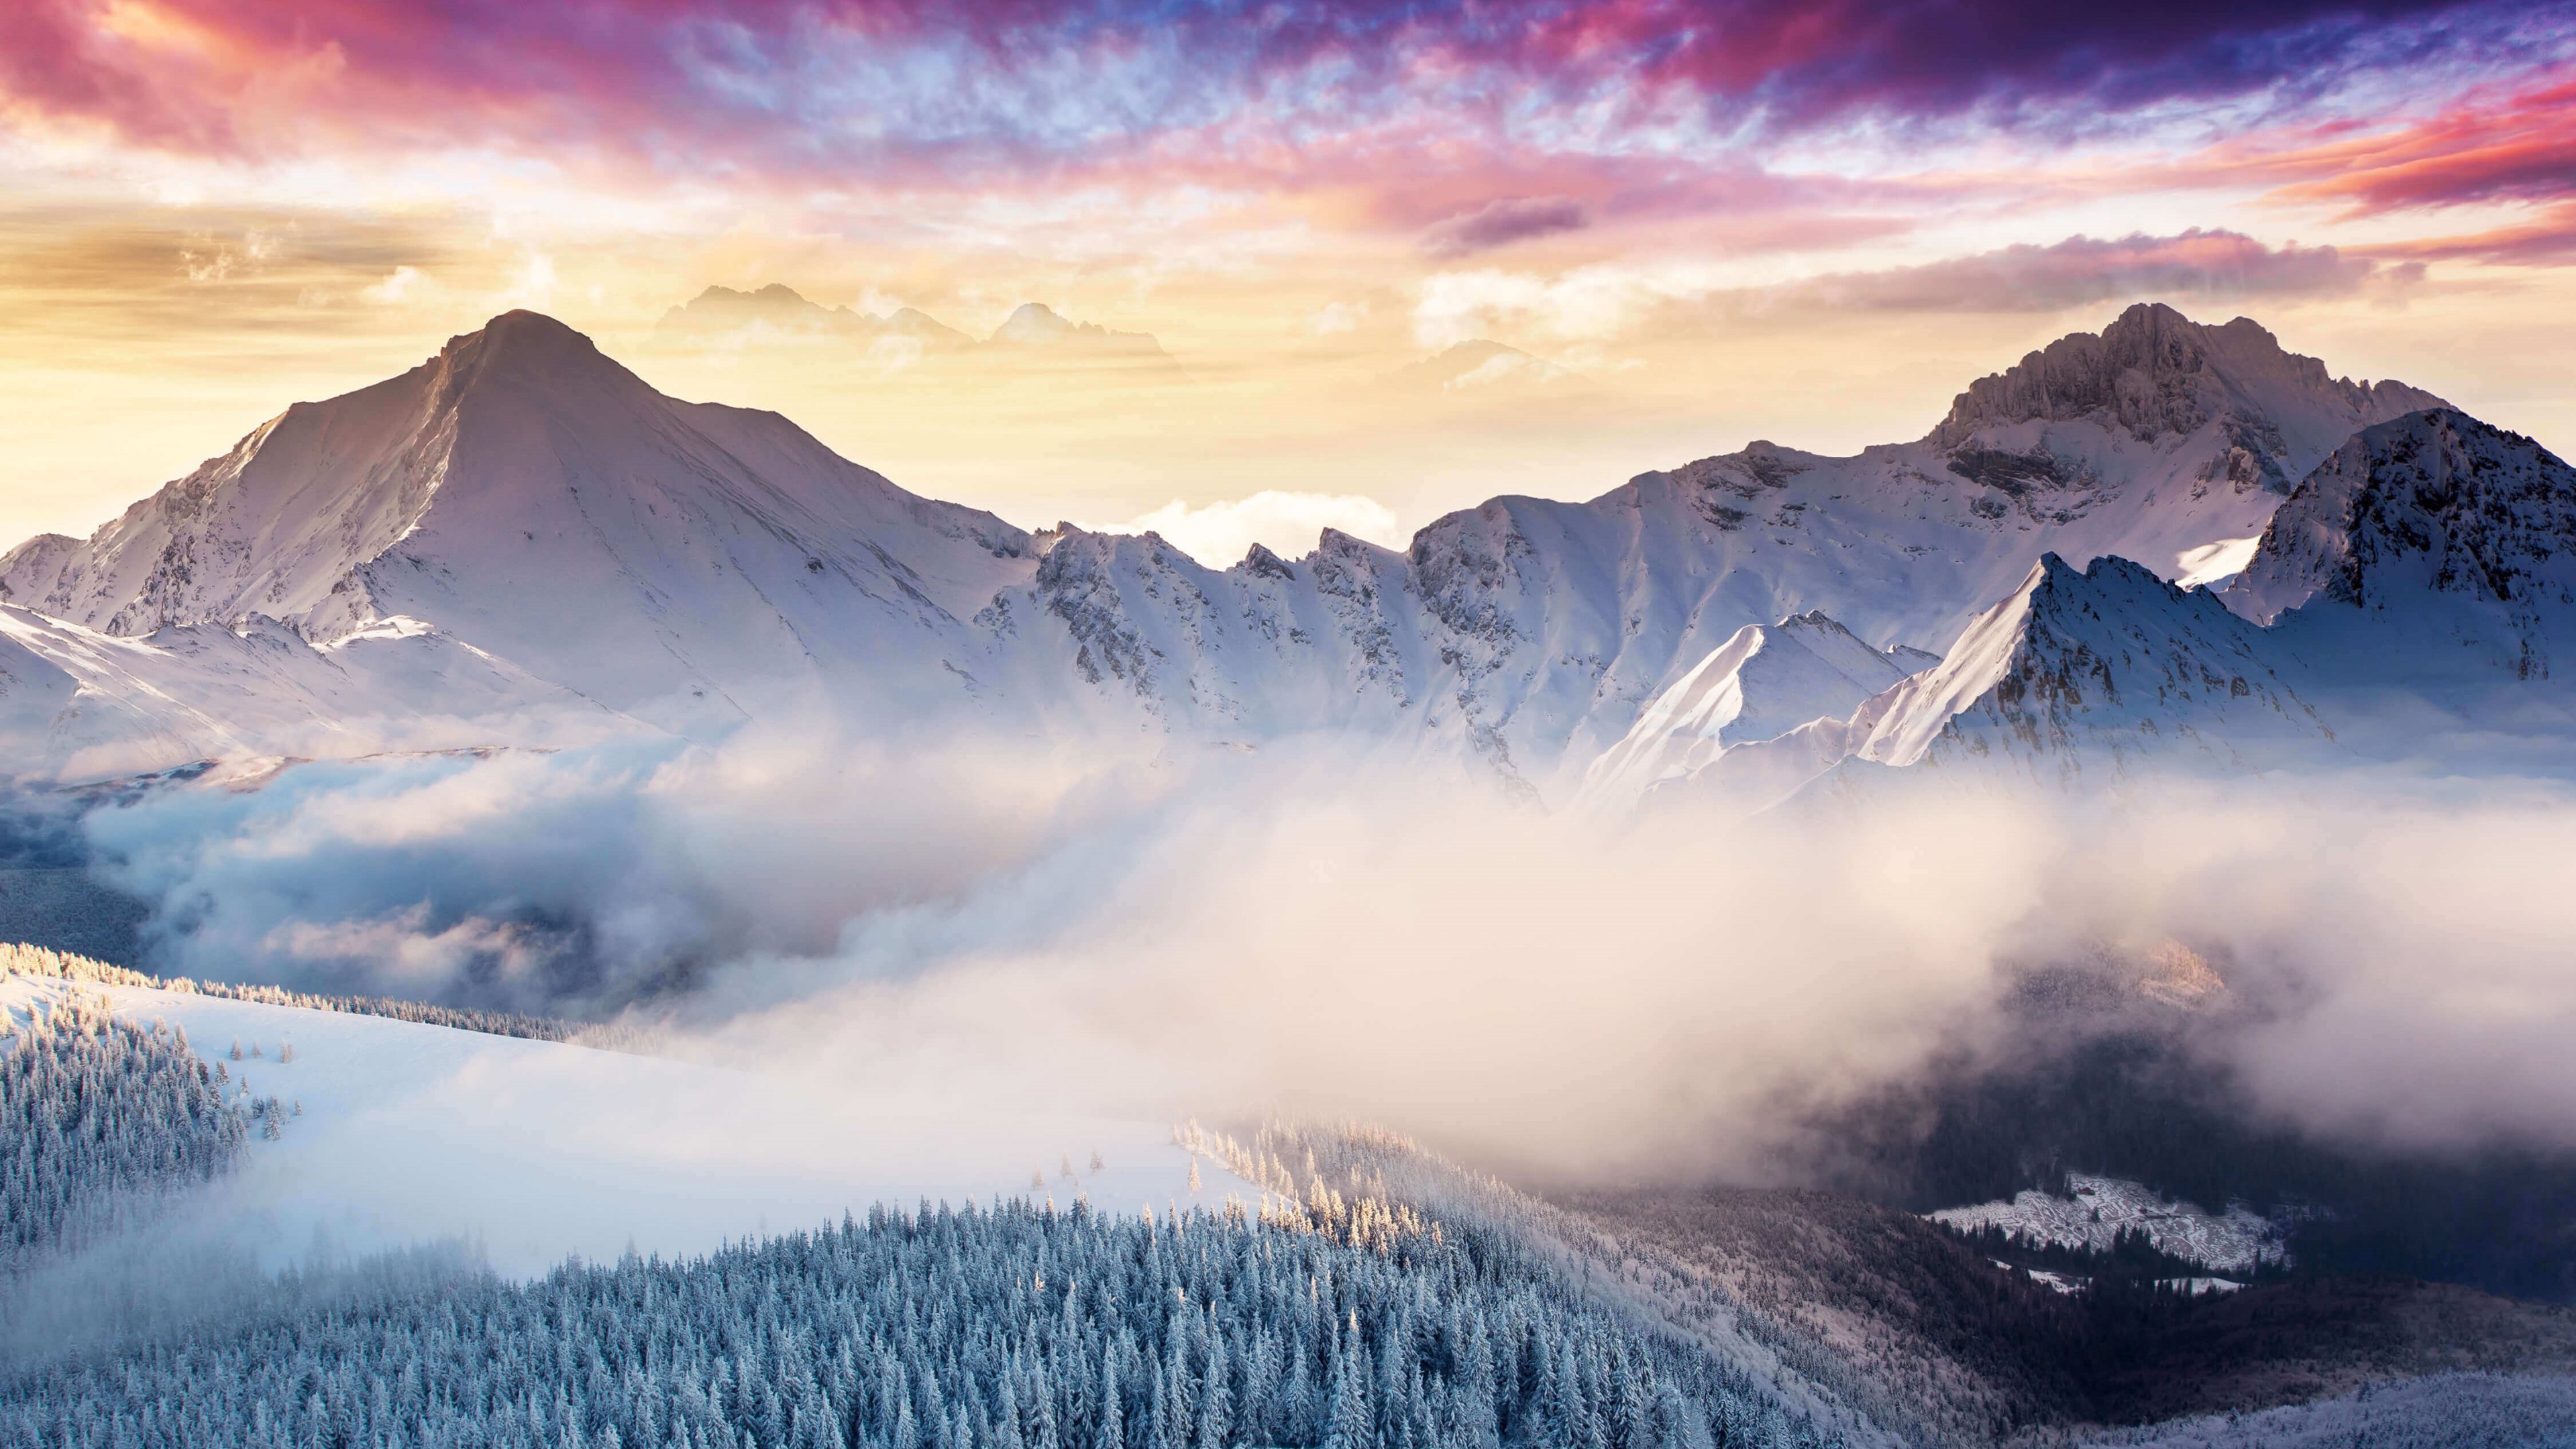 Winter Mountain Snow 4k - Surface Pro Wallpaper 4k - 3840x2160 Wallpaper -  